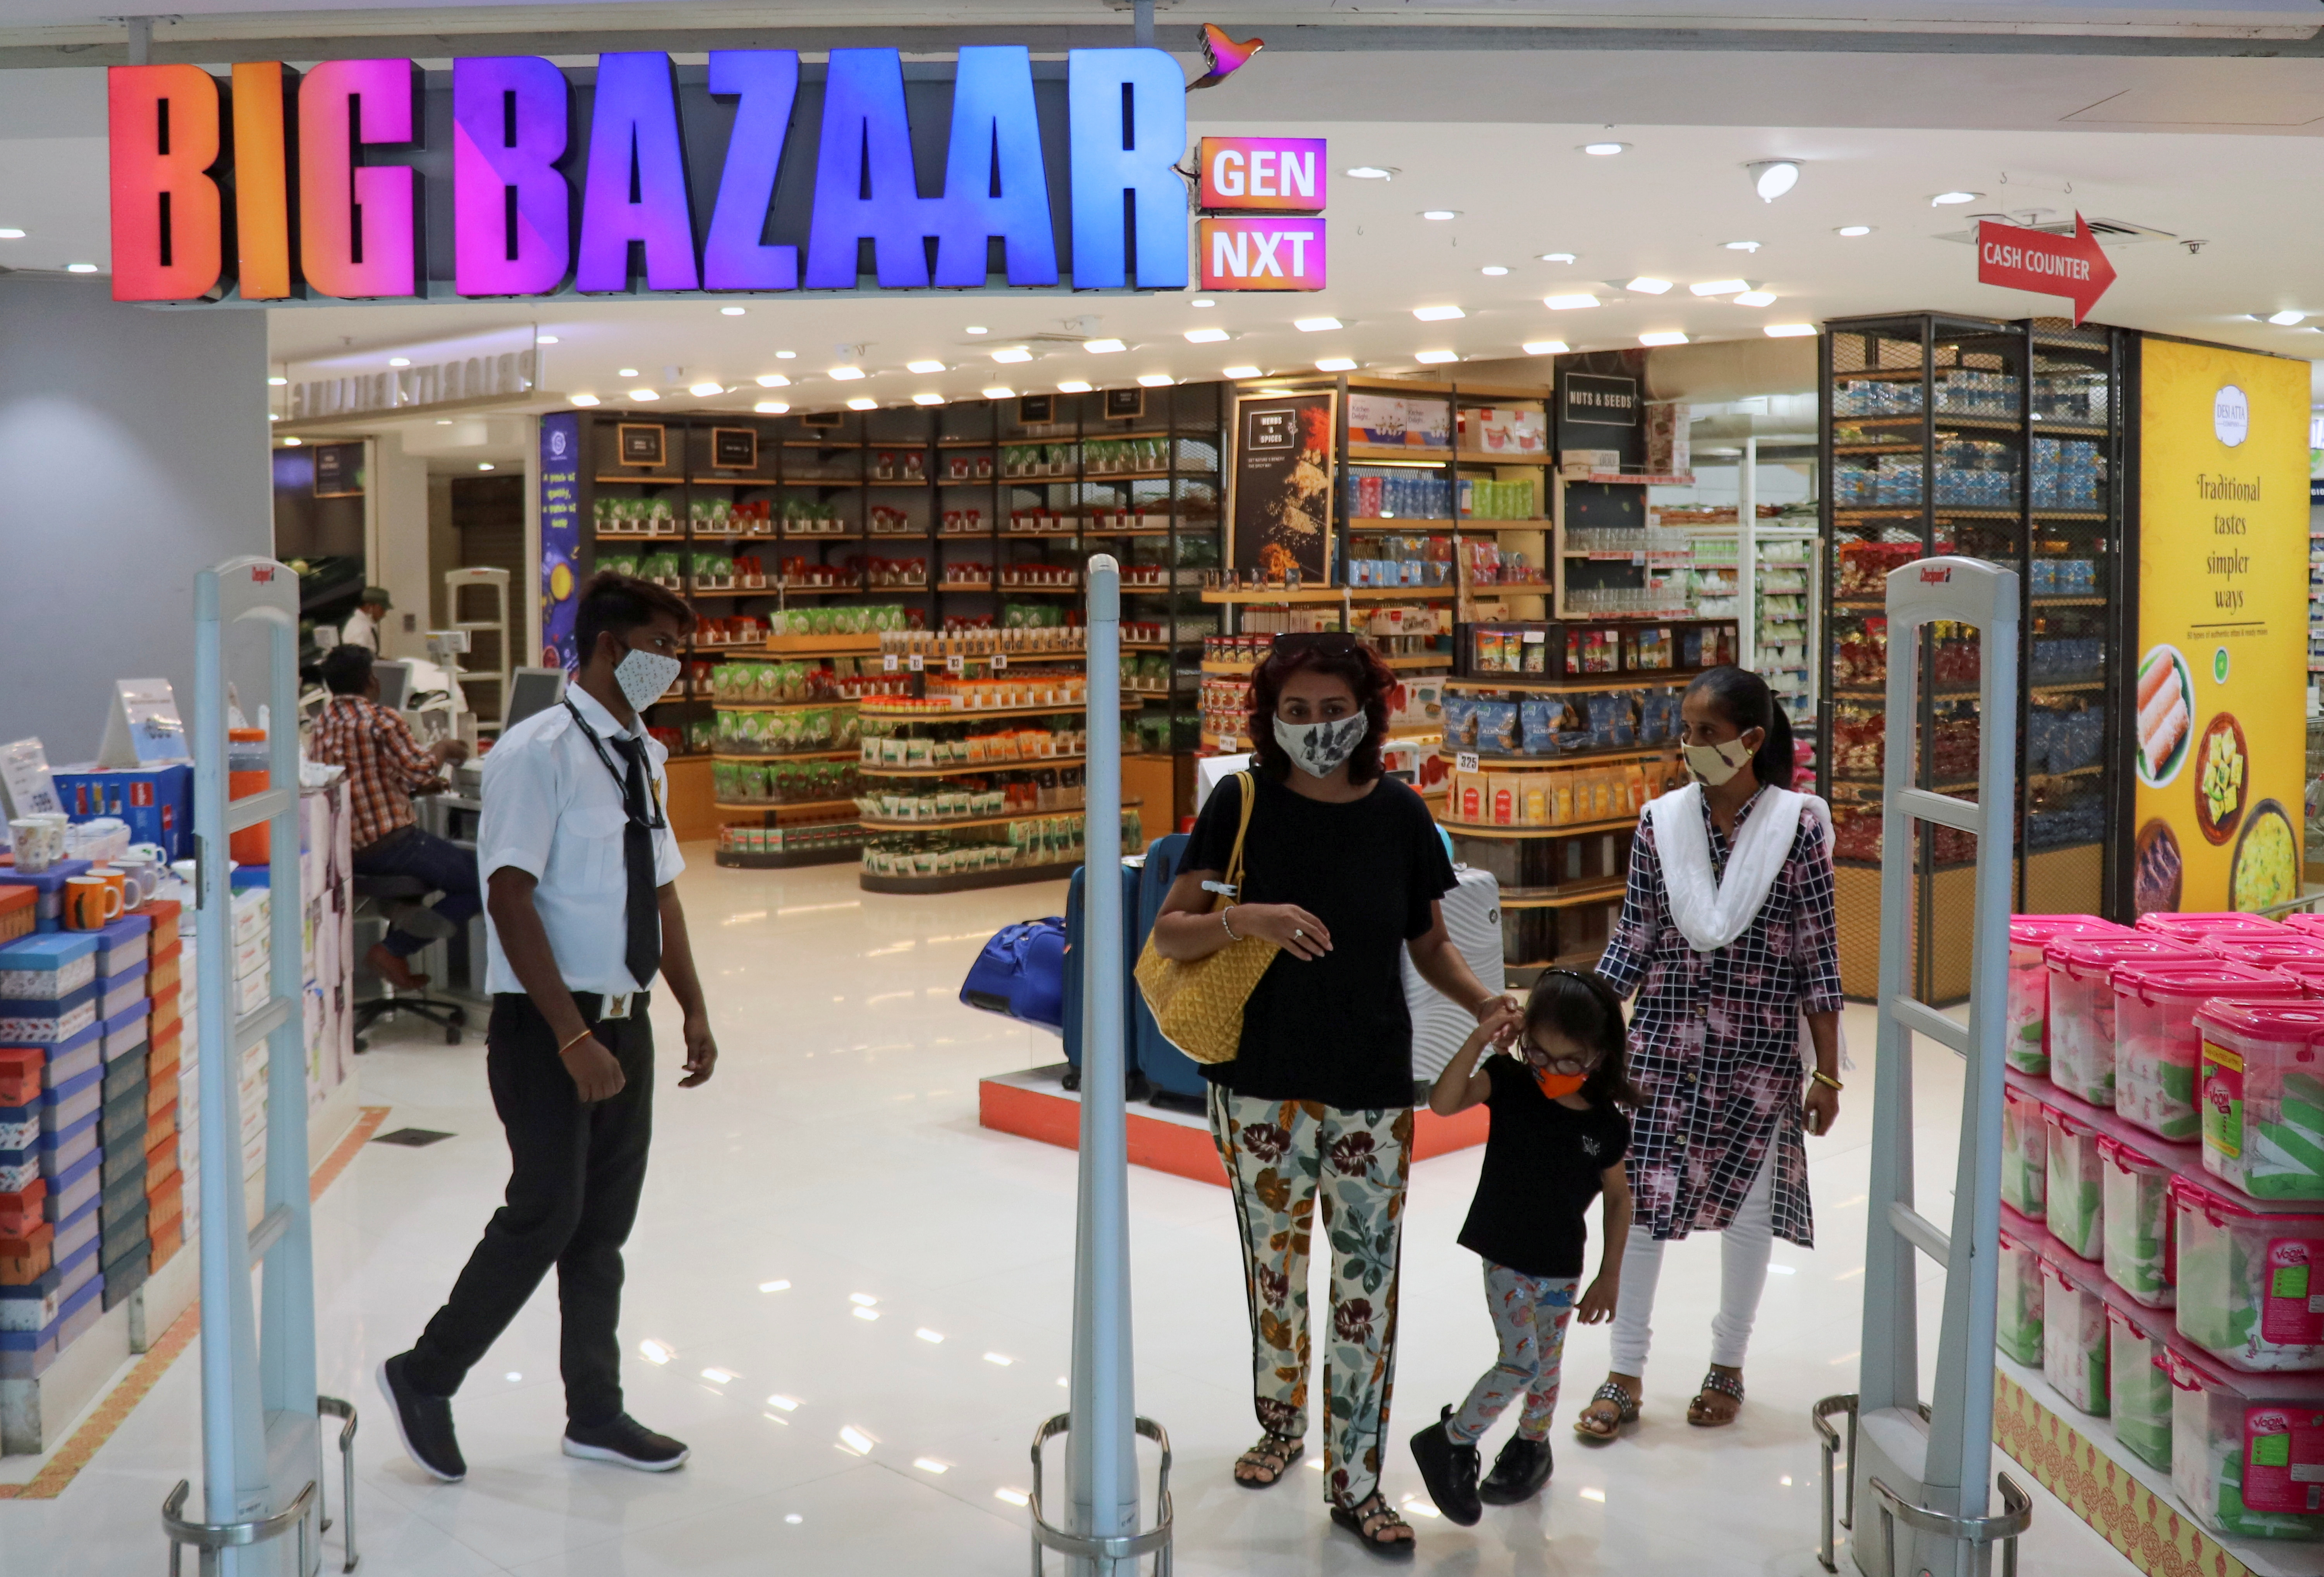 People exit the Big Bazaar retail store in Mumbai, India, November 25, 2020. REUTERS/Niharika Kulkarni/File Photo